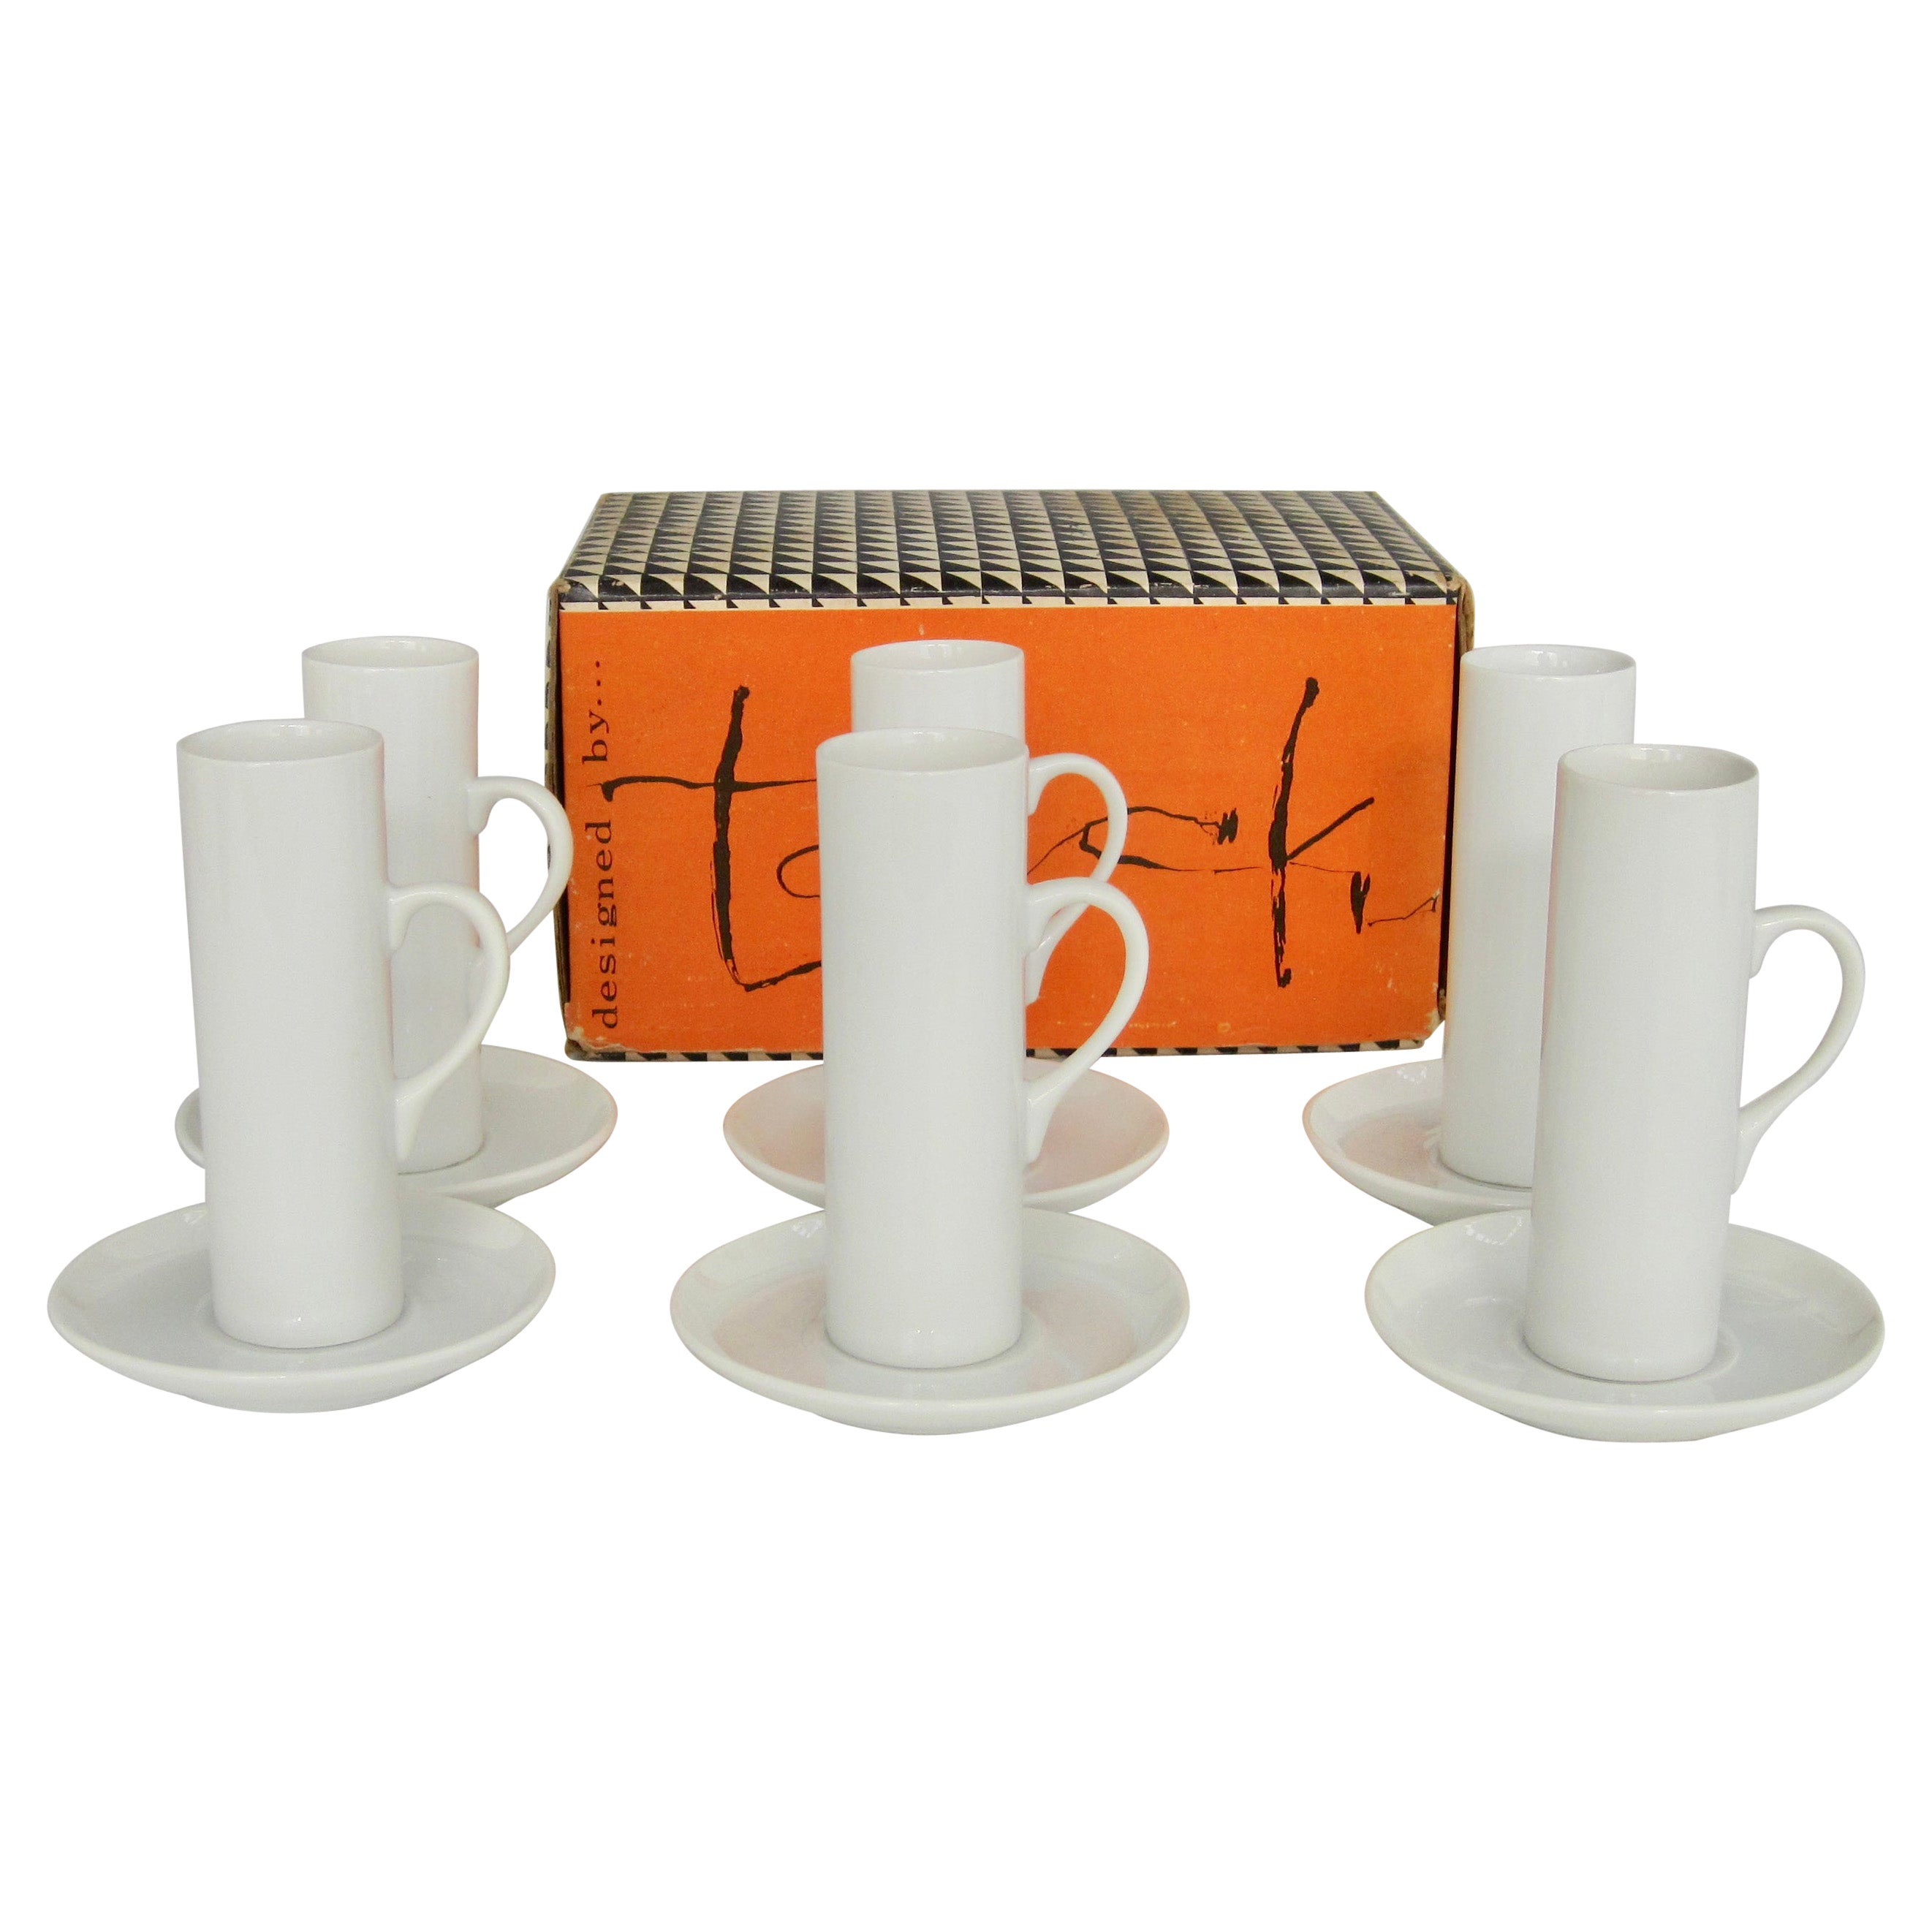 Lagardo Tackett Schmid White Porcelain Demitasse Cup & Saucer Set, 12 Pieces